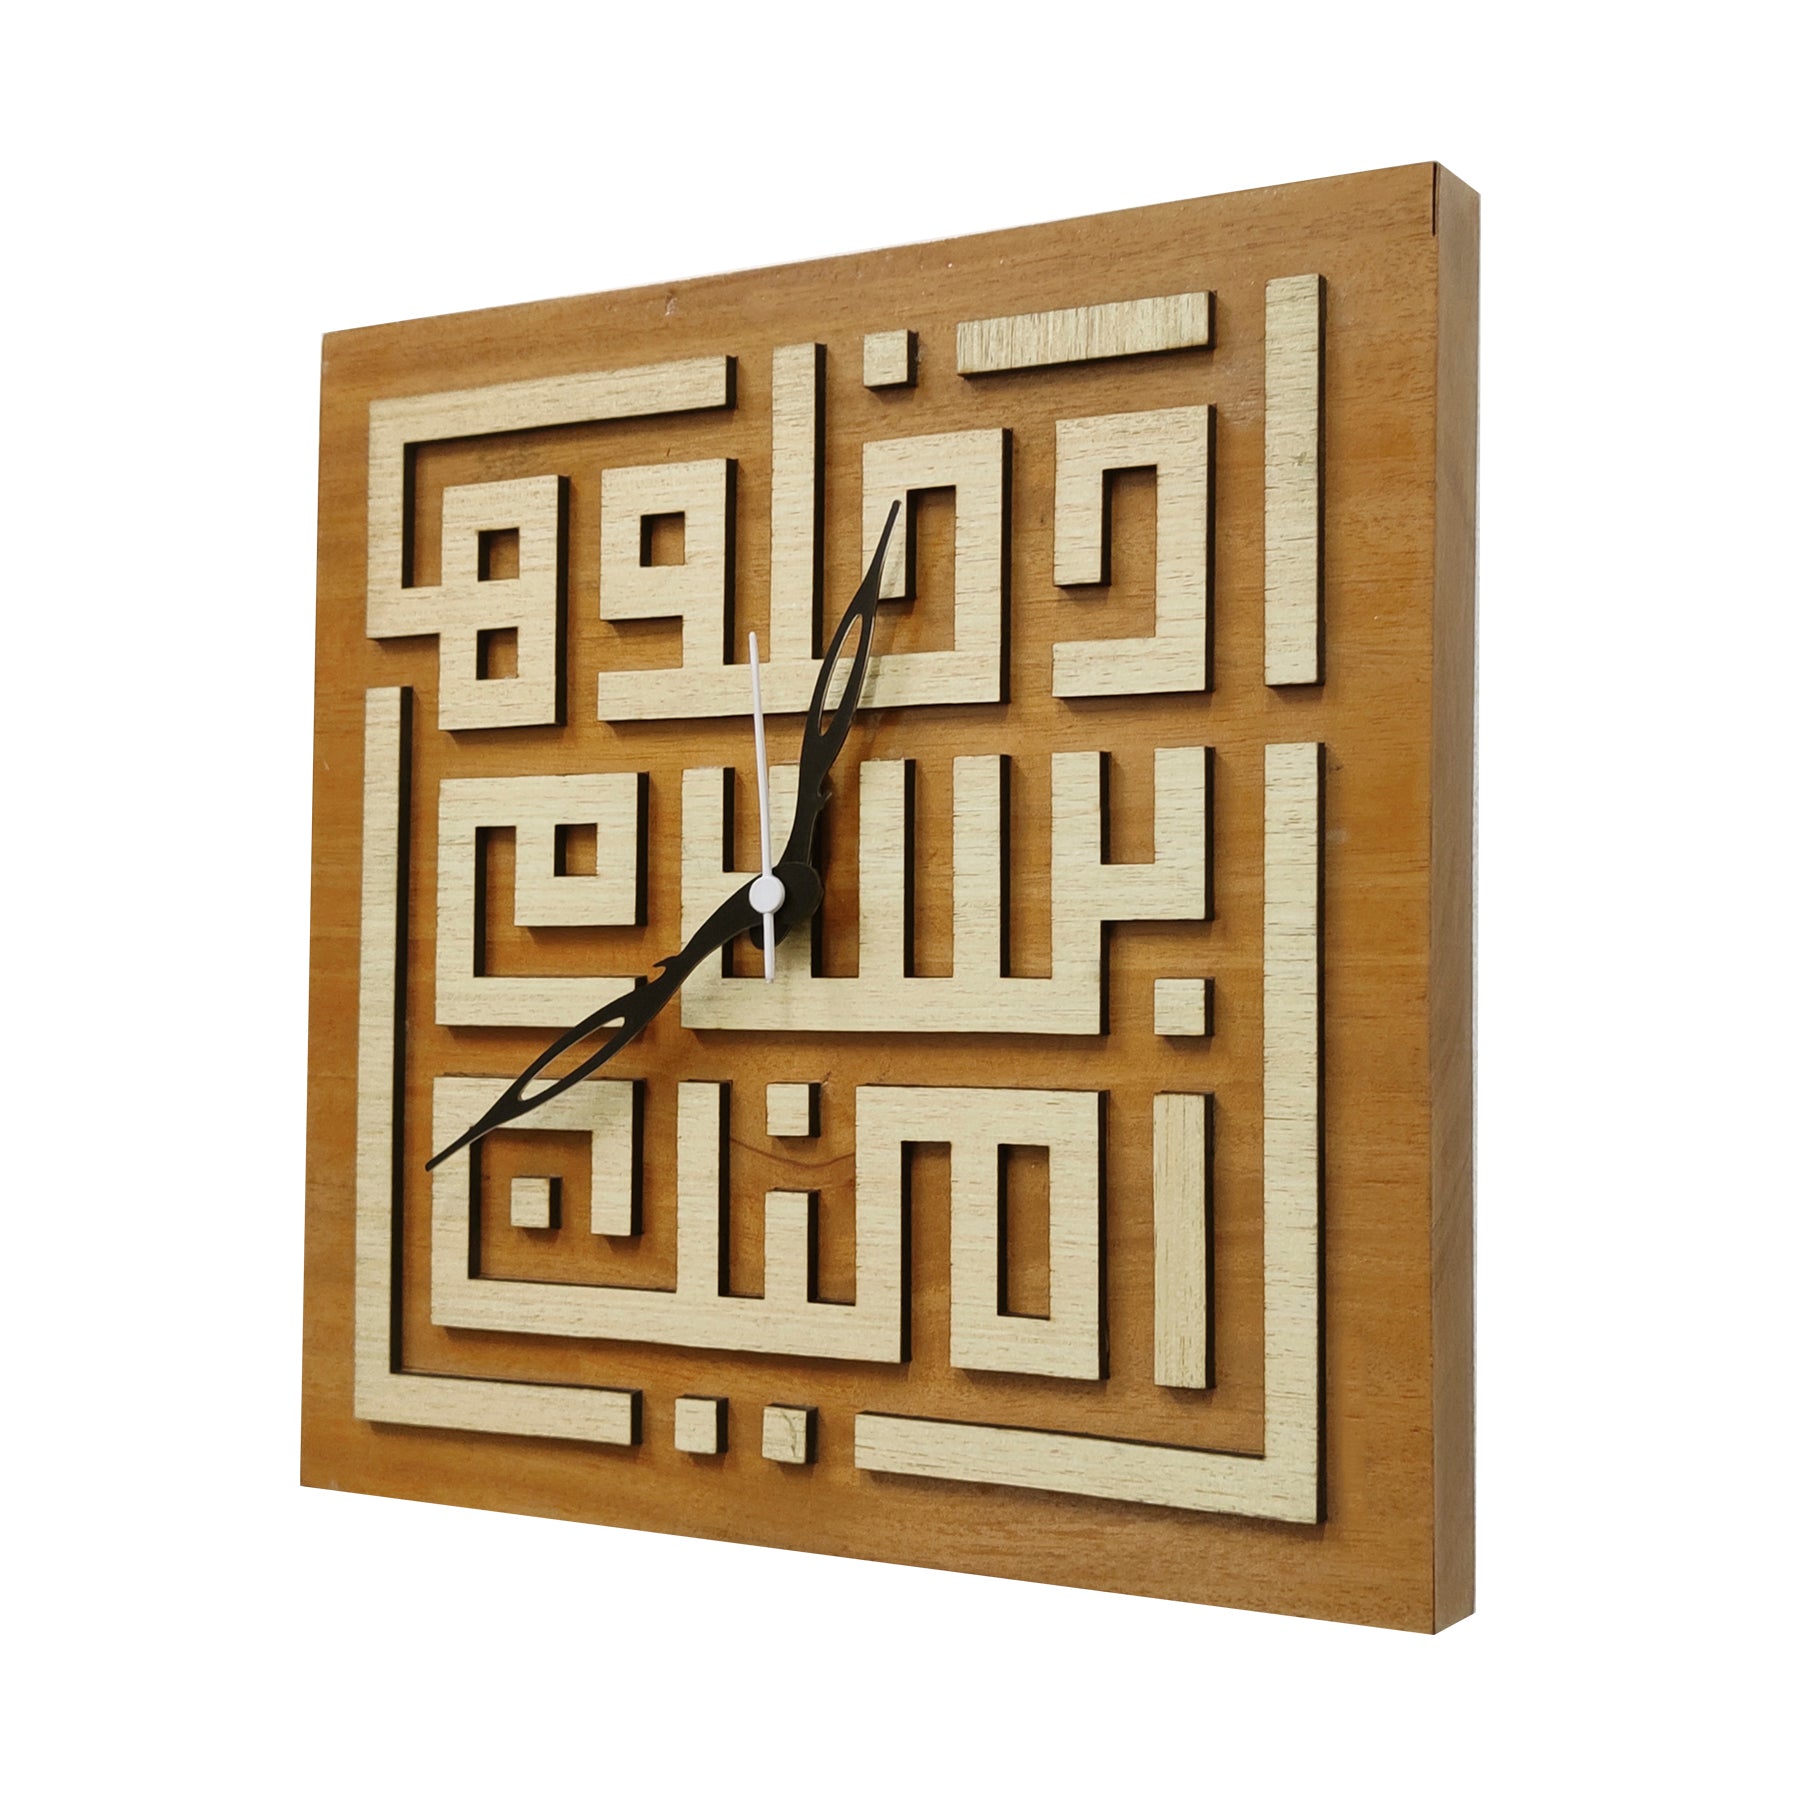 Wooden Arabic Calligraphy Wall Clock Gift